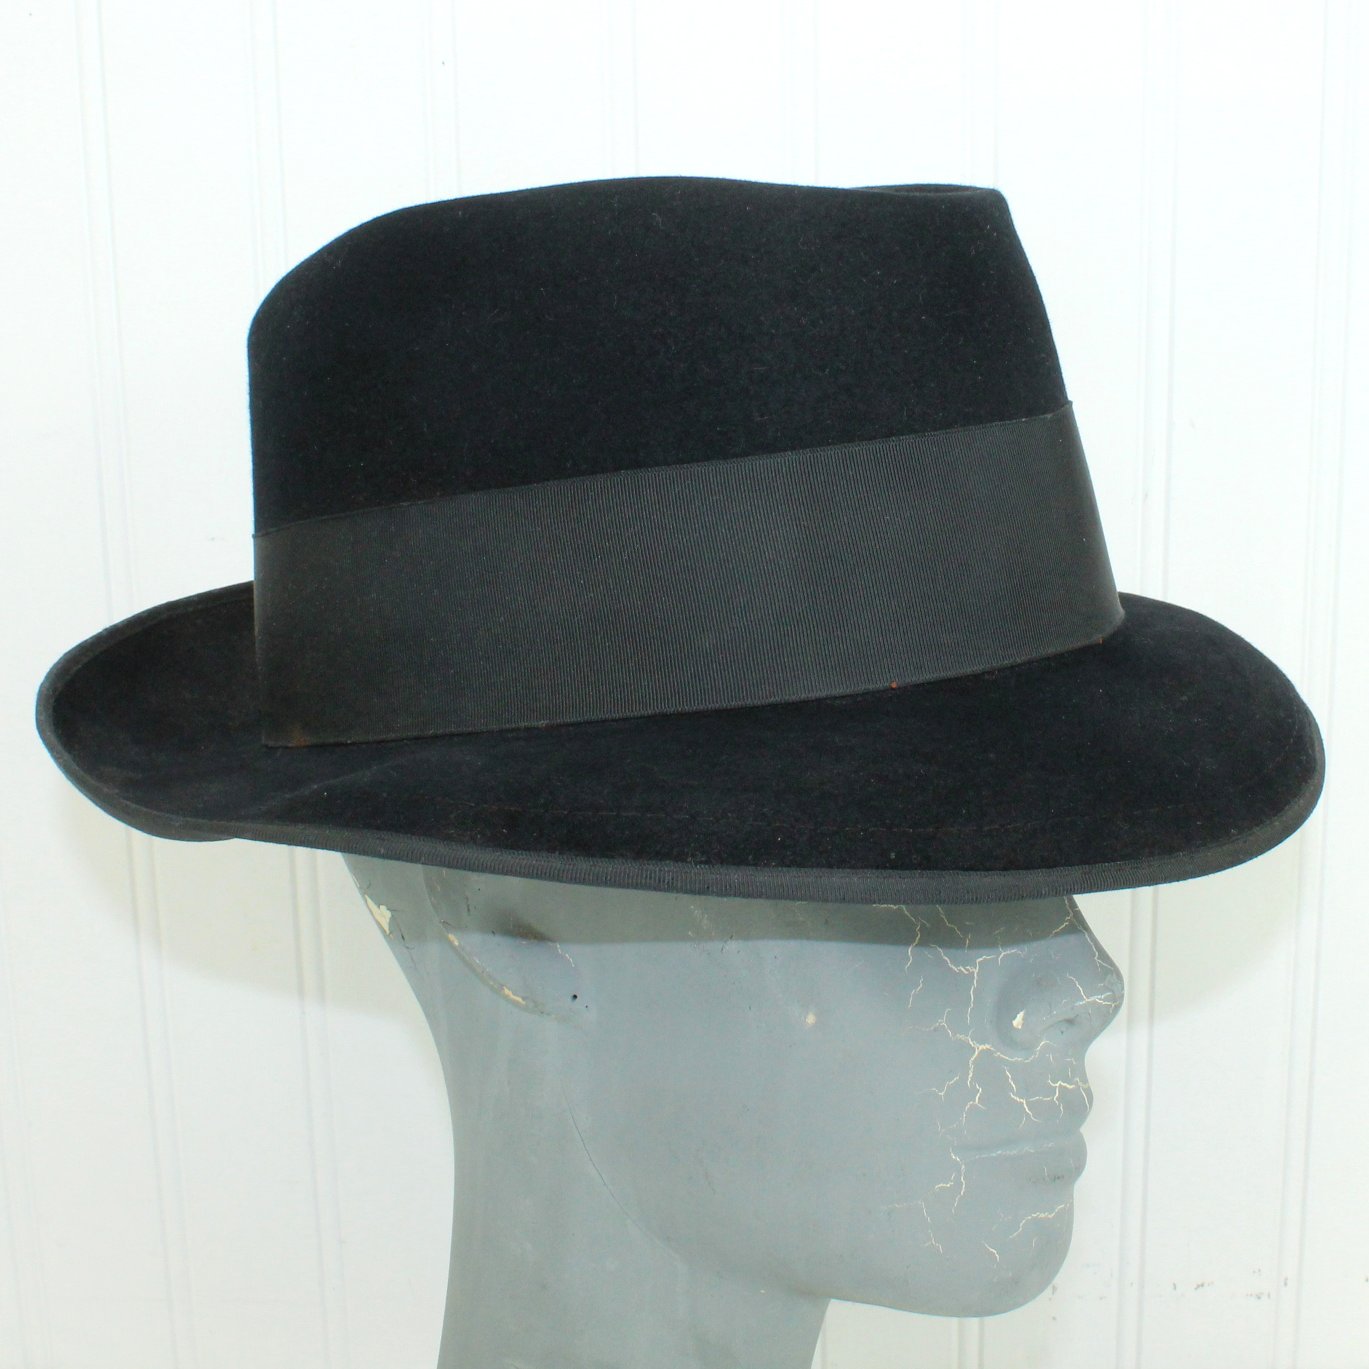 Dobbs Vintage Classic Black Hat Fedora Robt Kopp Huntington W Va Excellent side view